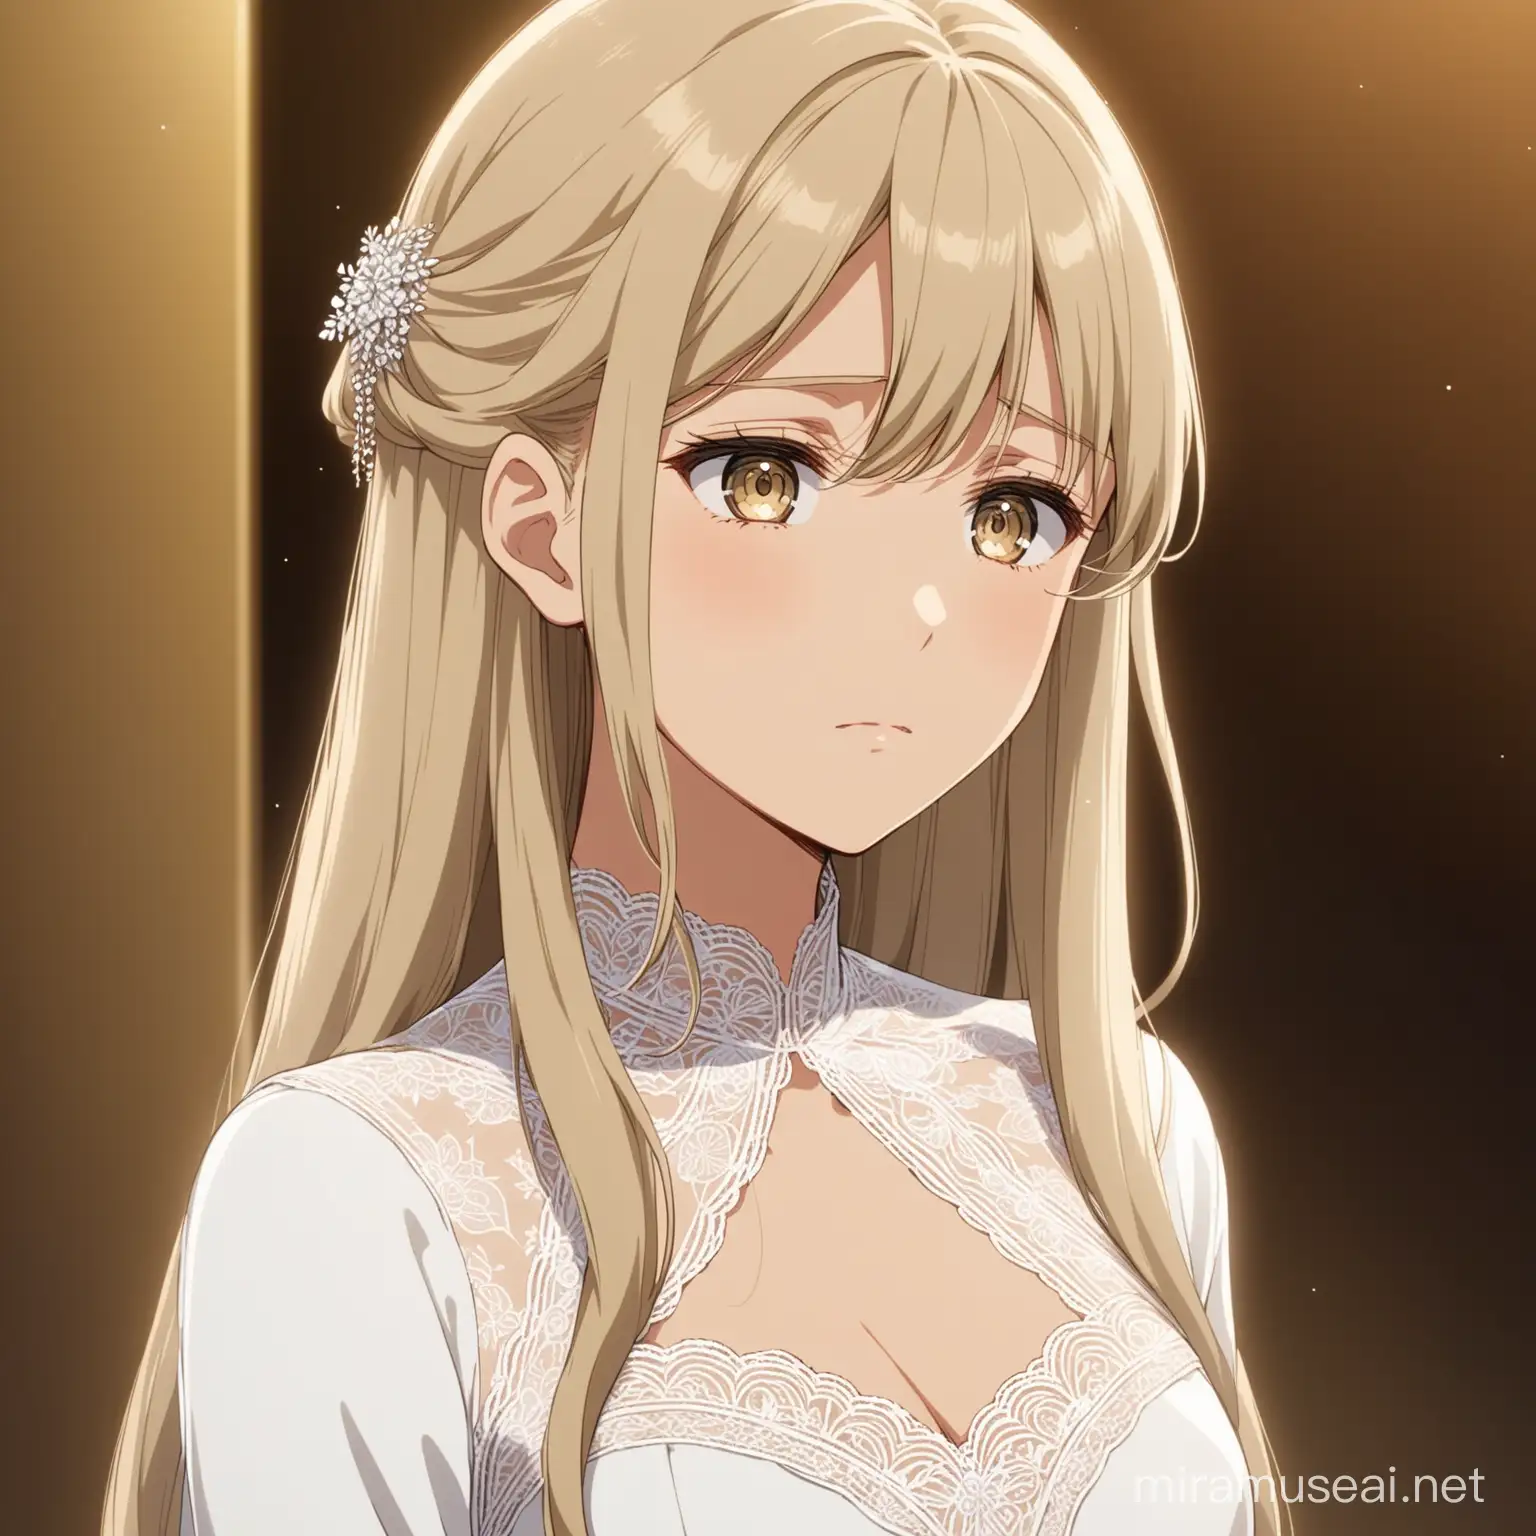 A ash blonde hair woman, she has sad hopeful eyes, she wears a white elegant dress. in anime